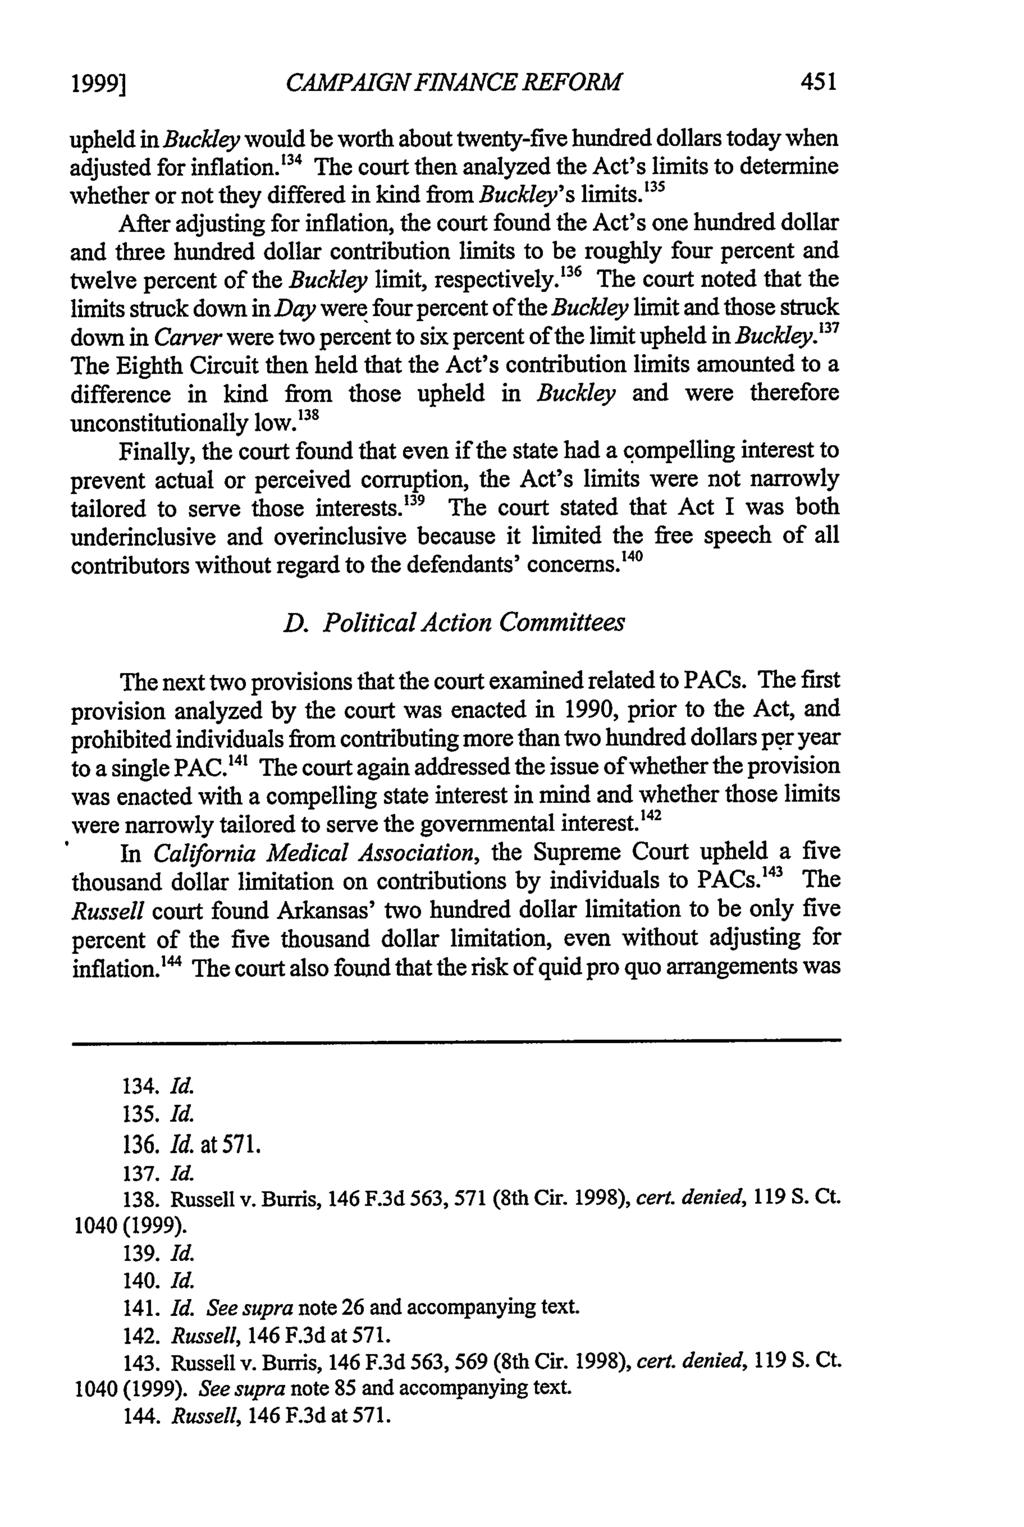 1999] Criscimagna: Criscimagna: Narrow Application of Buckley v. Valeo: CAMPAIGN FINANCE REFORM upheld in Buckley would be worth about twenty-five hundred dollars today when adjusted for inflation.